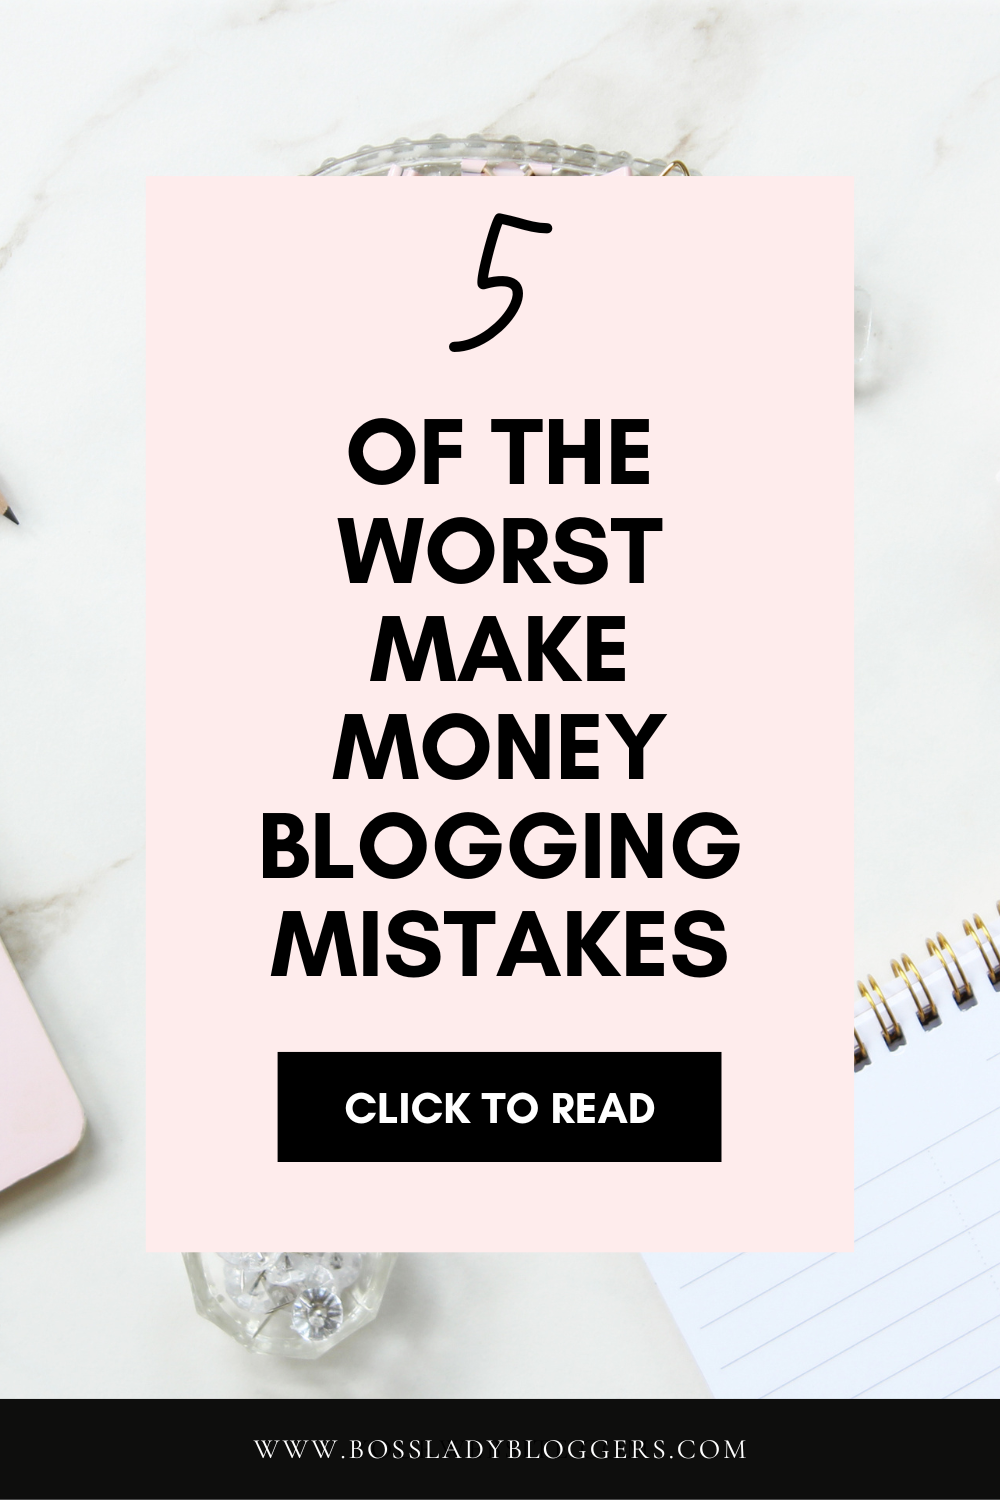 Make money blogging mistakes